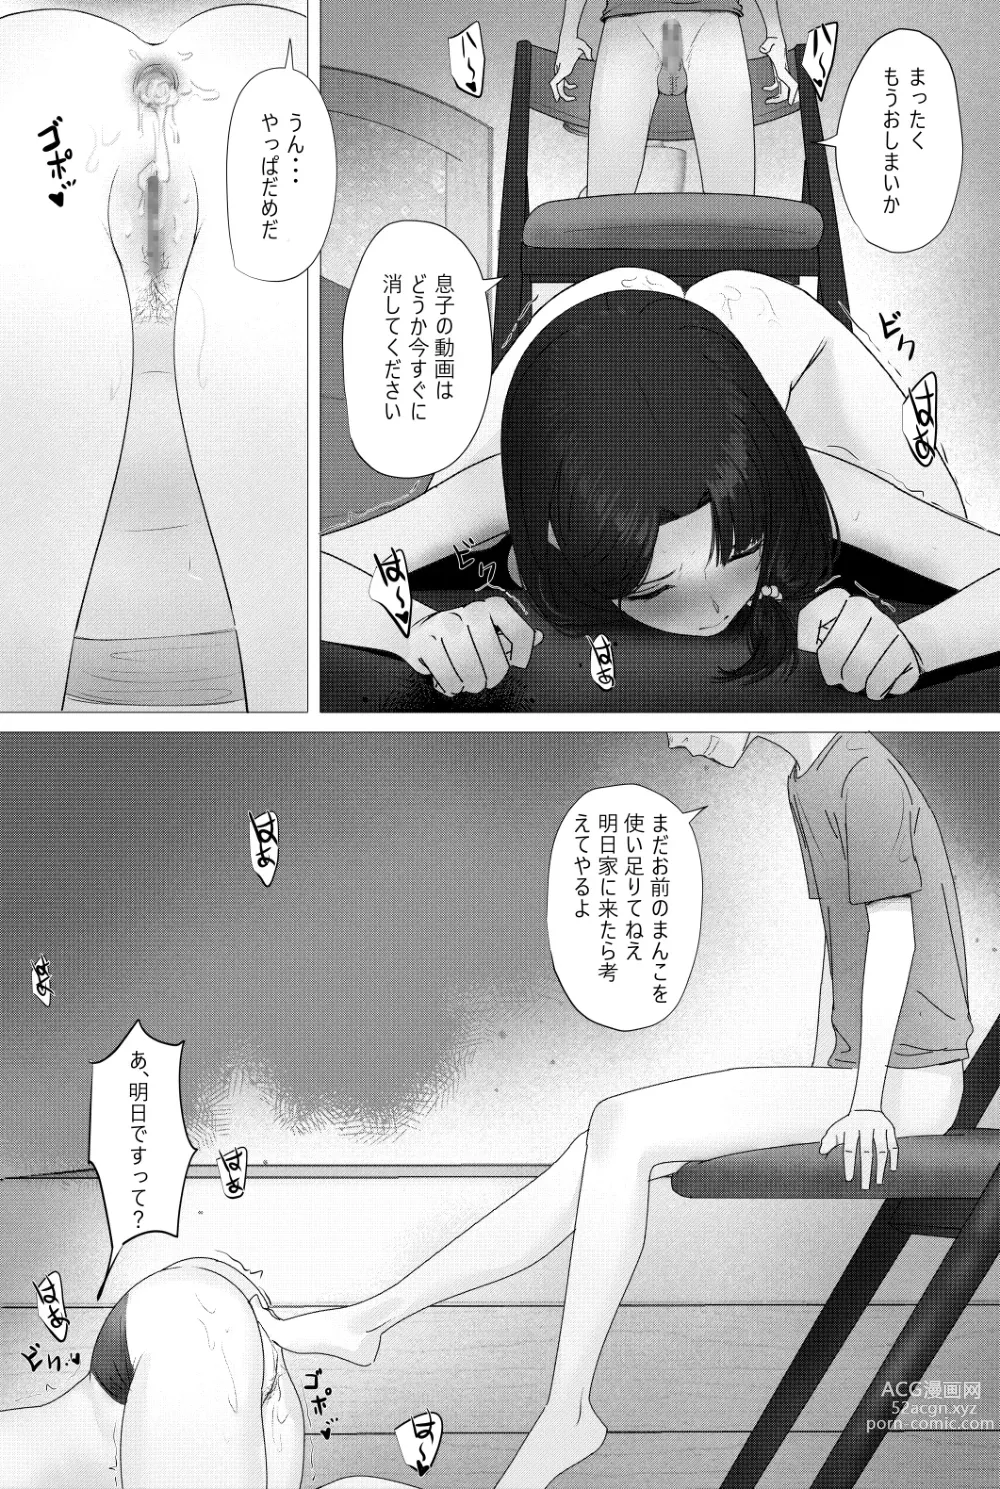 Page 68 of doujinshi Warugaki Series